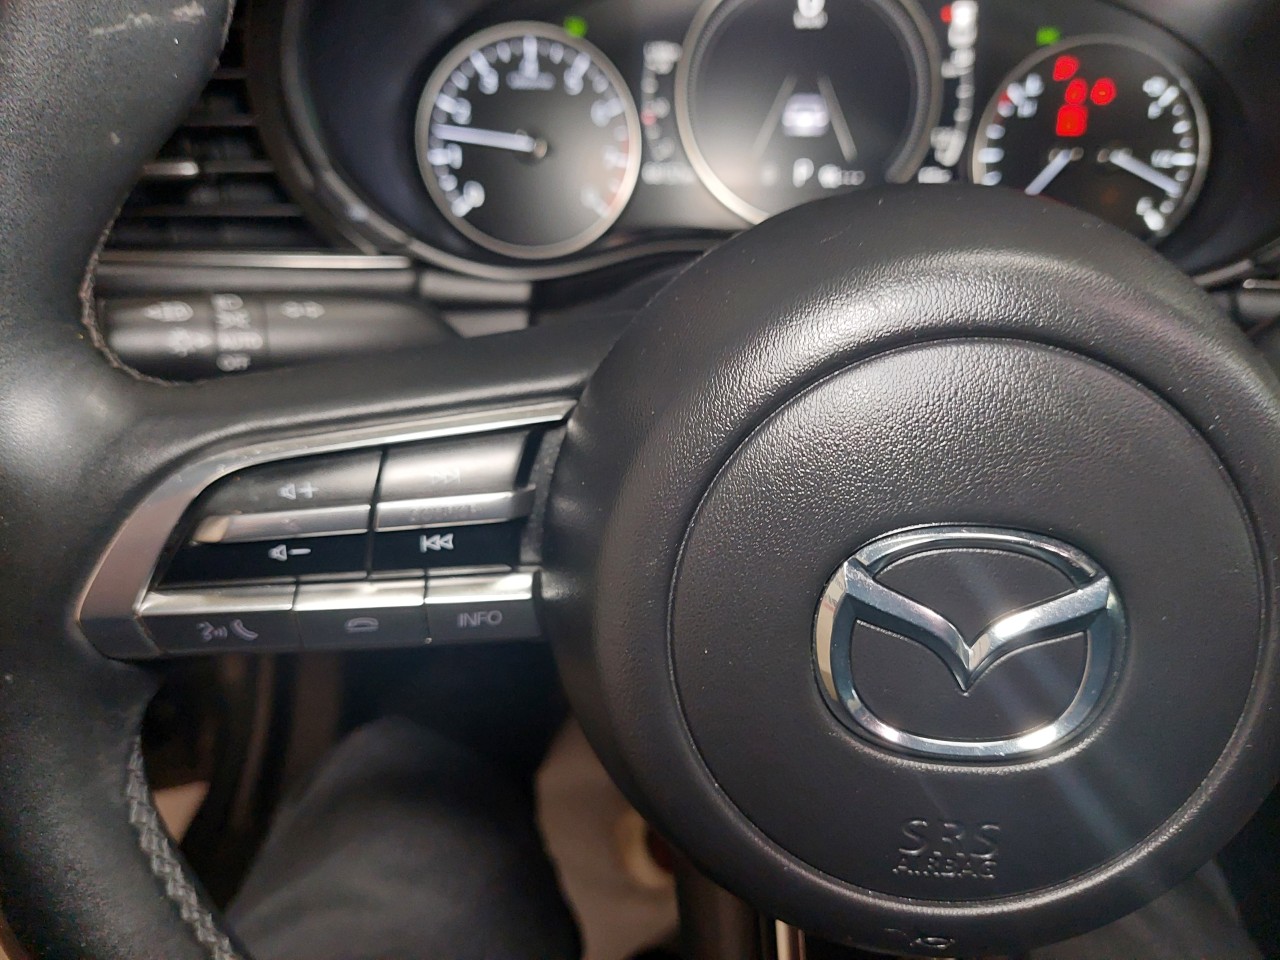 2019 Mazda 3 GS Main Image